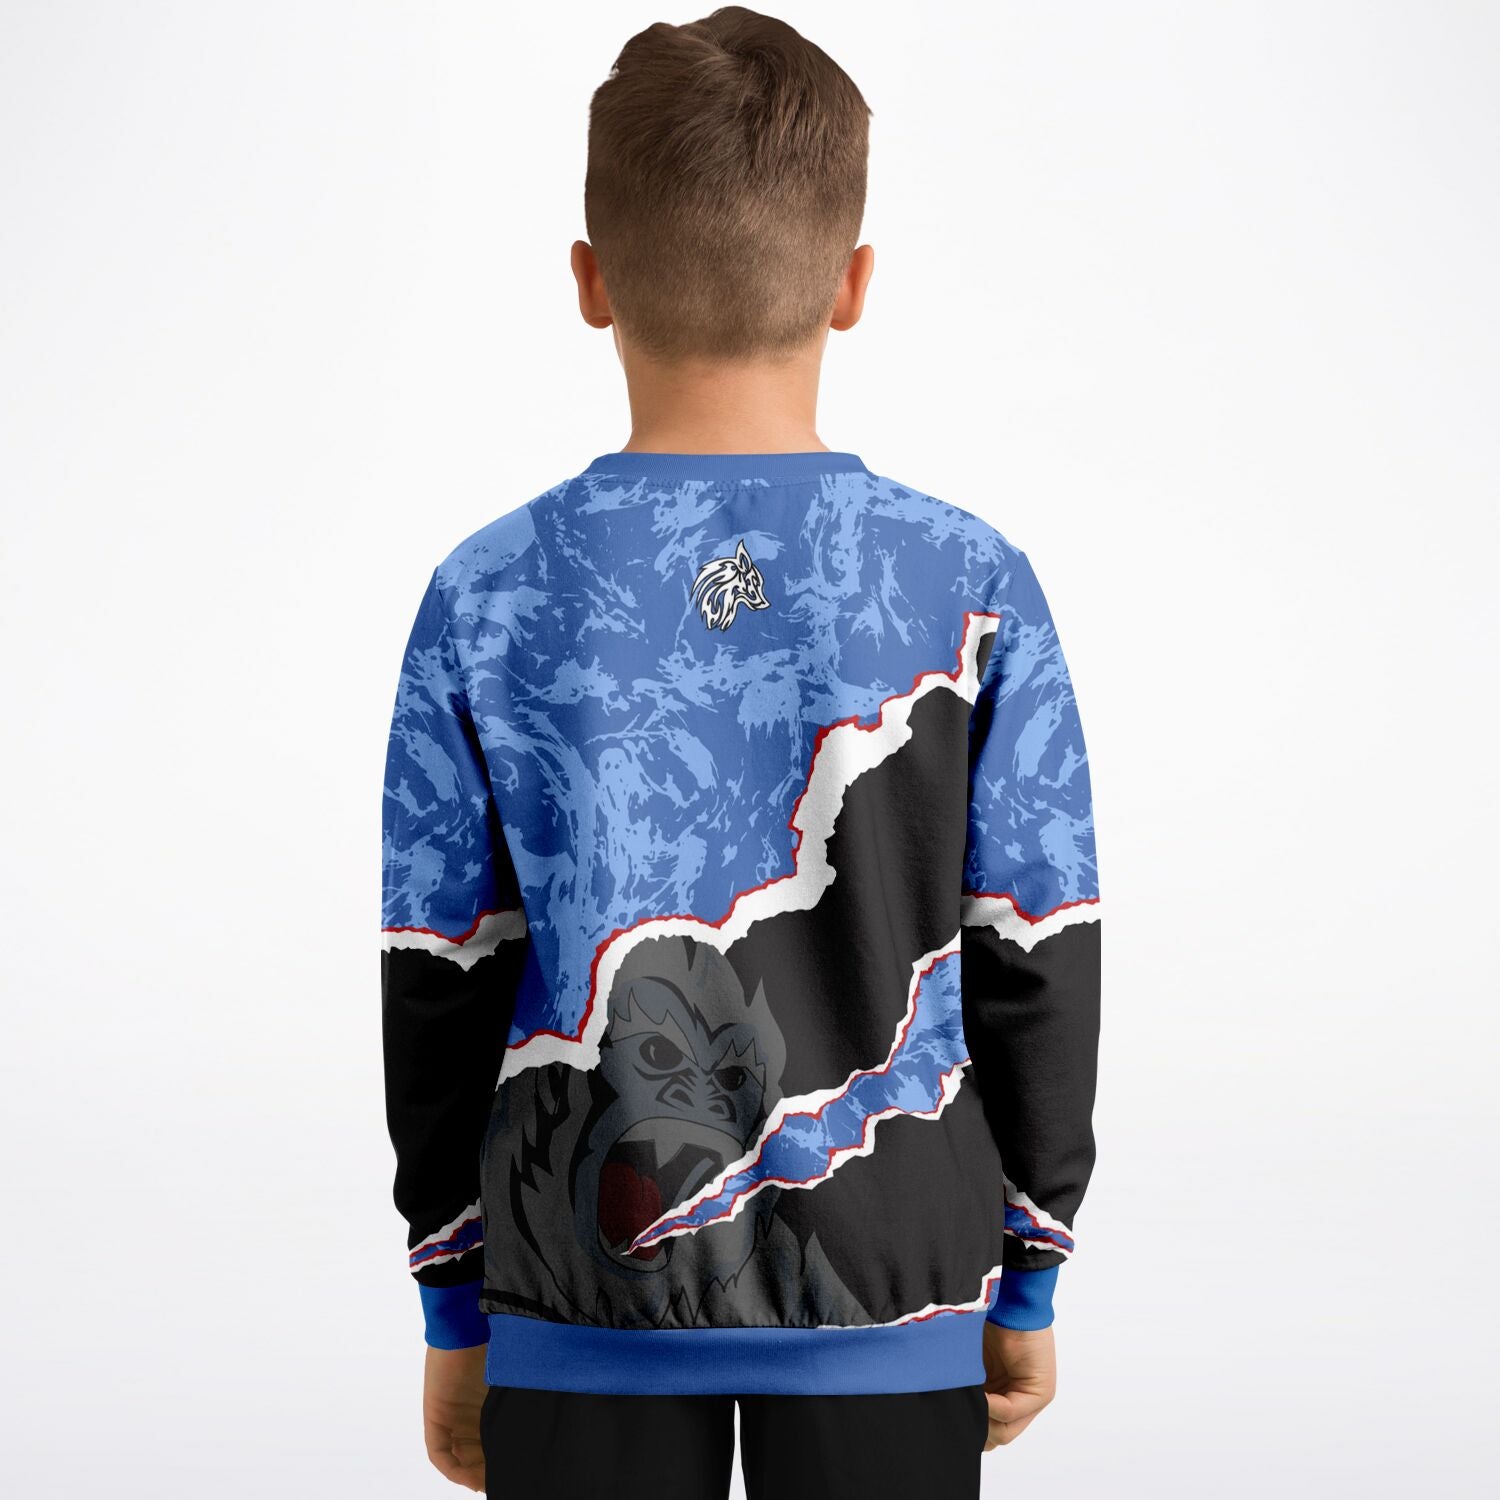 Blue Hills Beasts Kids/Youth Athletic Sweatshirt